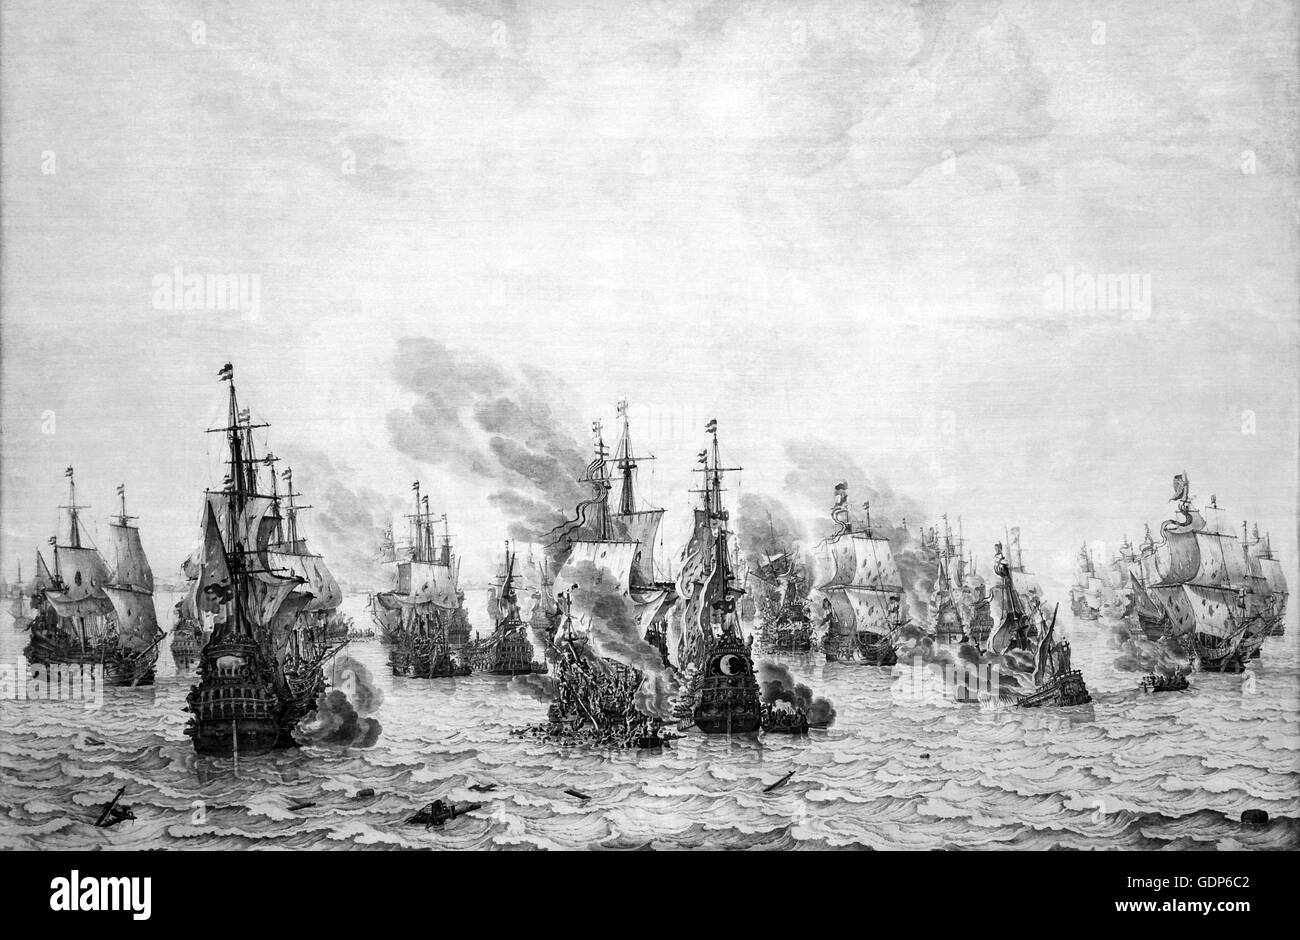 The Battle of Livorno Leghorn by Willem van de Velde I.1611-1693.Willem van de Velde the Elder. Dutch Golden Age seascape painter. Stock Photo